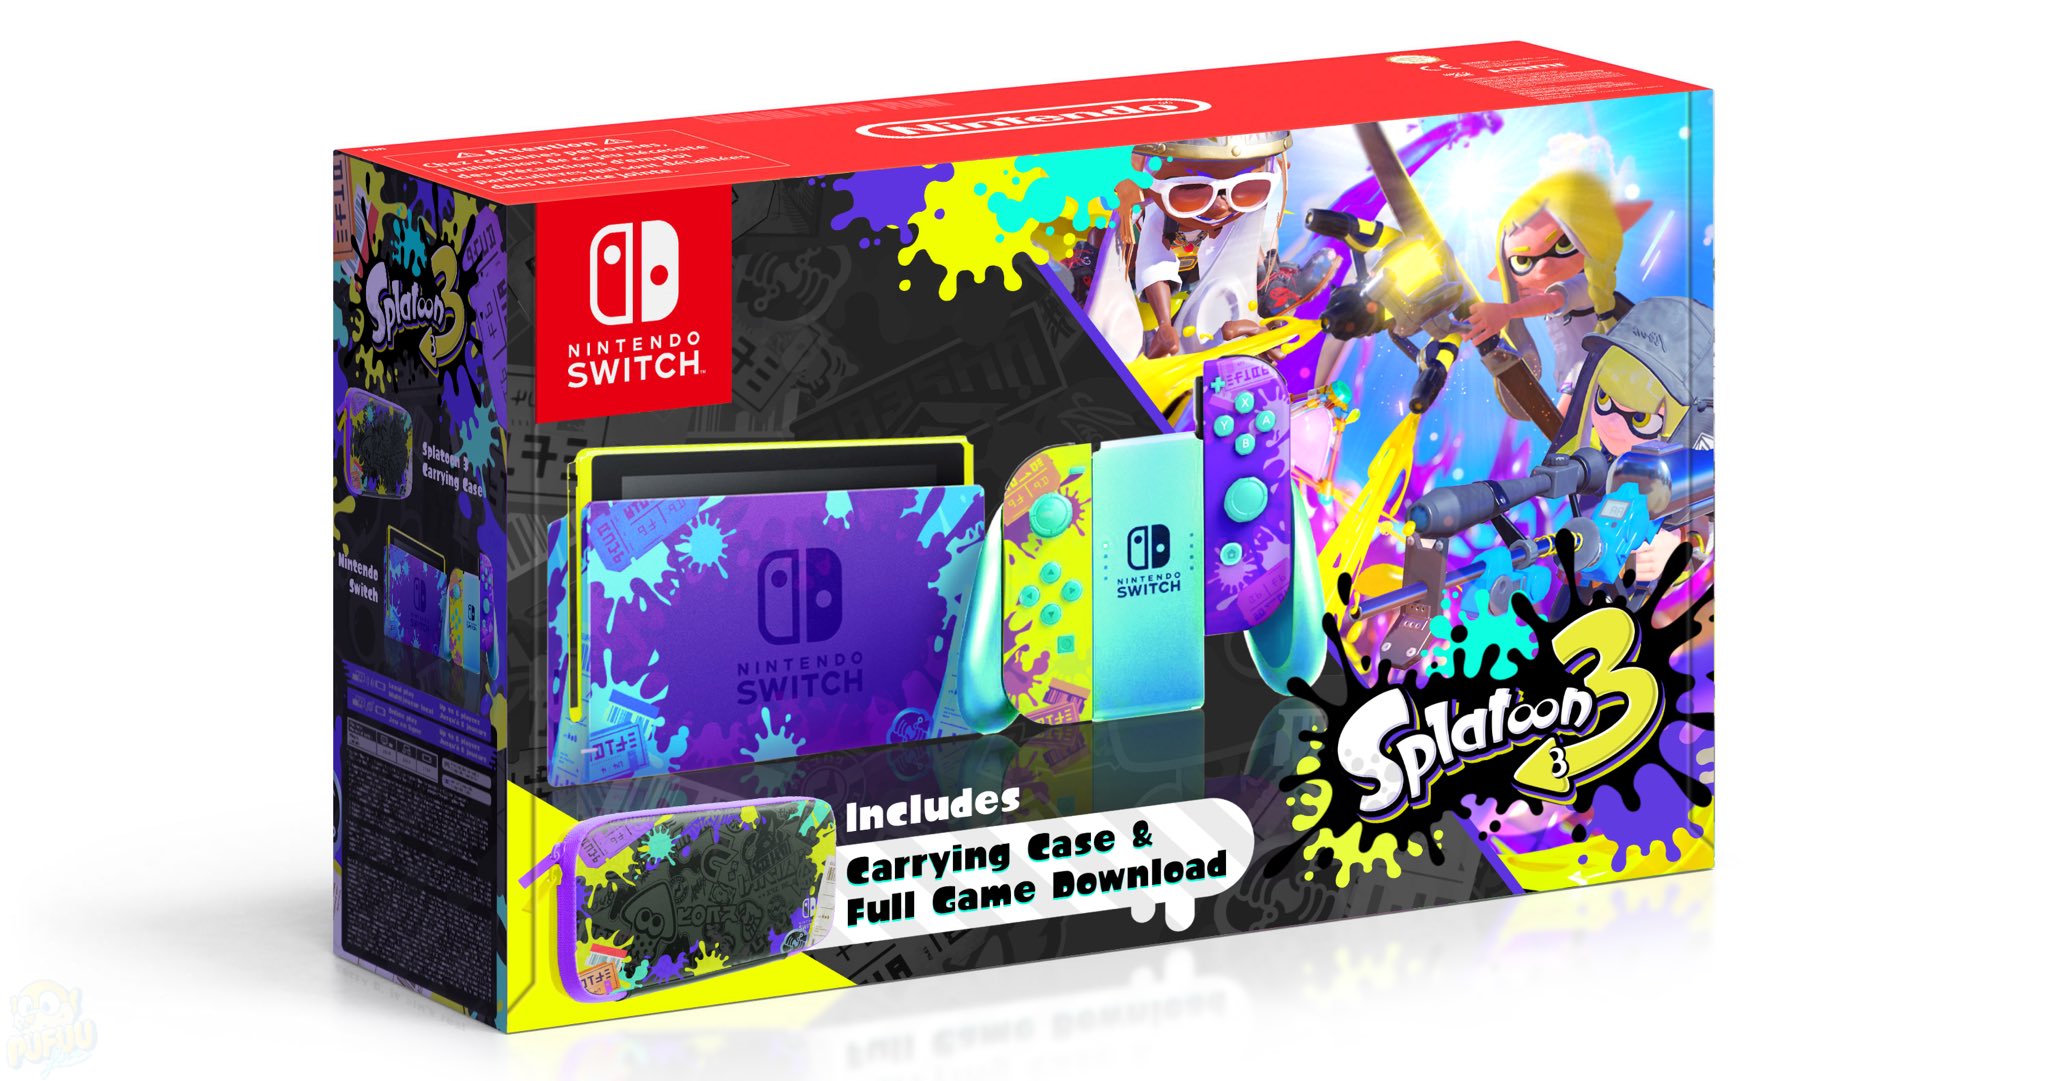 Nintendo switch splatoon edition. Nintendo Switch Splatoon 3 Edition. Nintendo Switch Splatoon 2 Edition. Чехол для Нинтендо свитч олед сплатун 3. Nintendo Switch OLED 2.